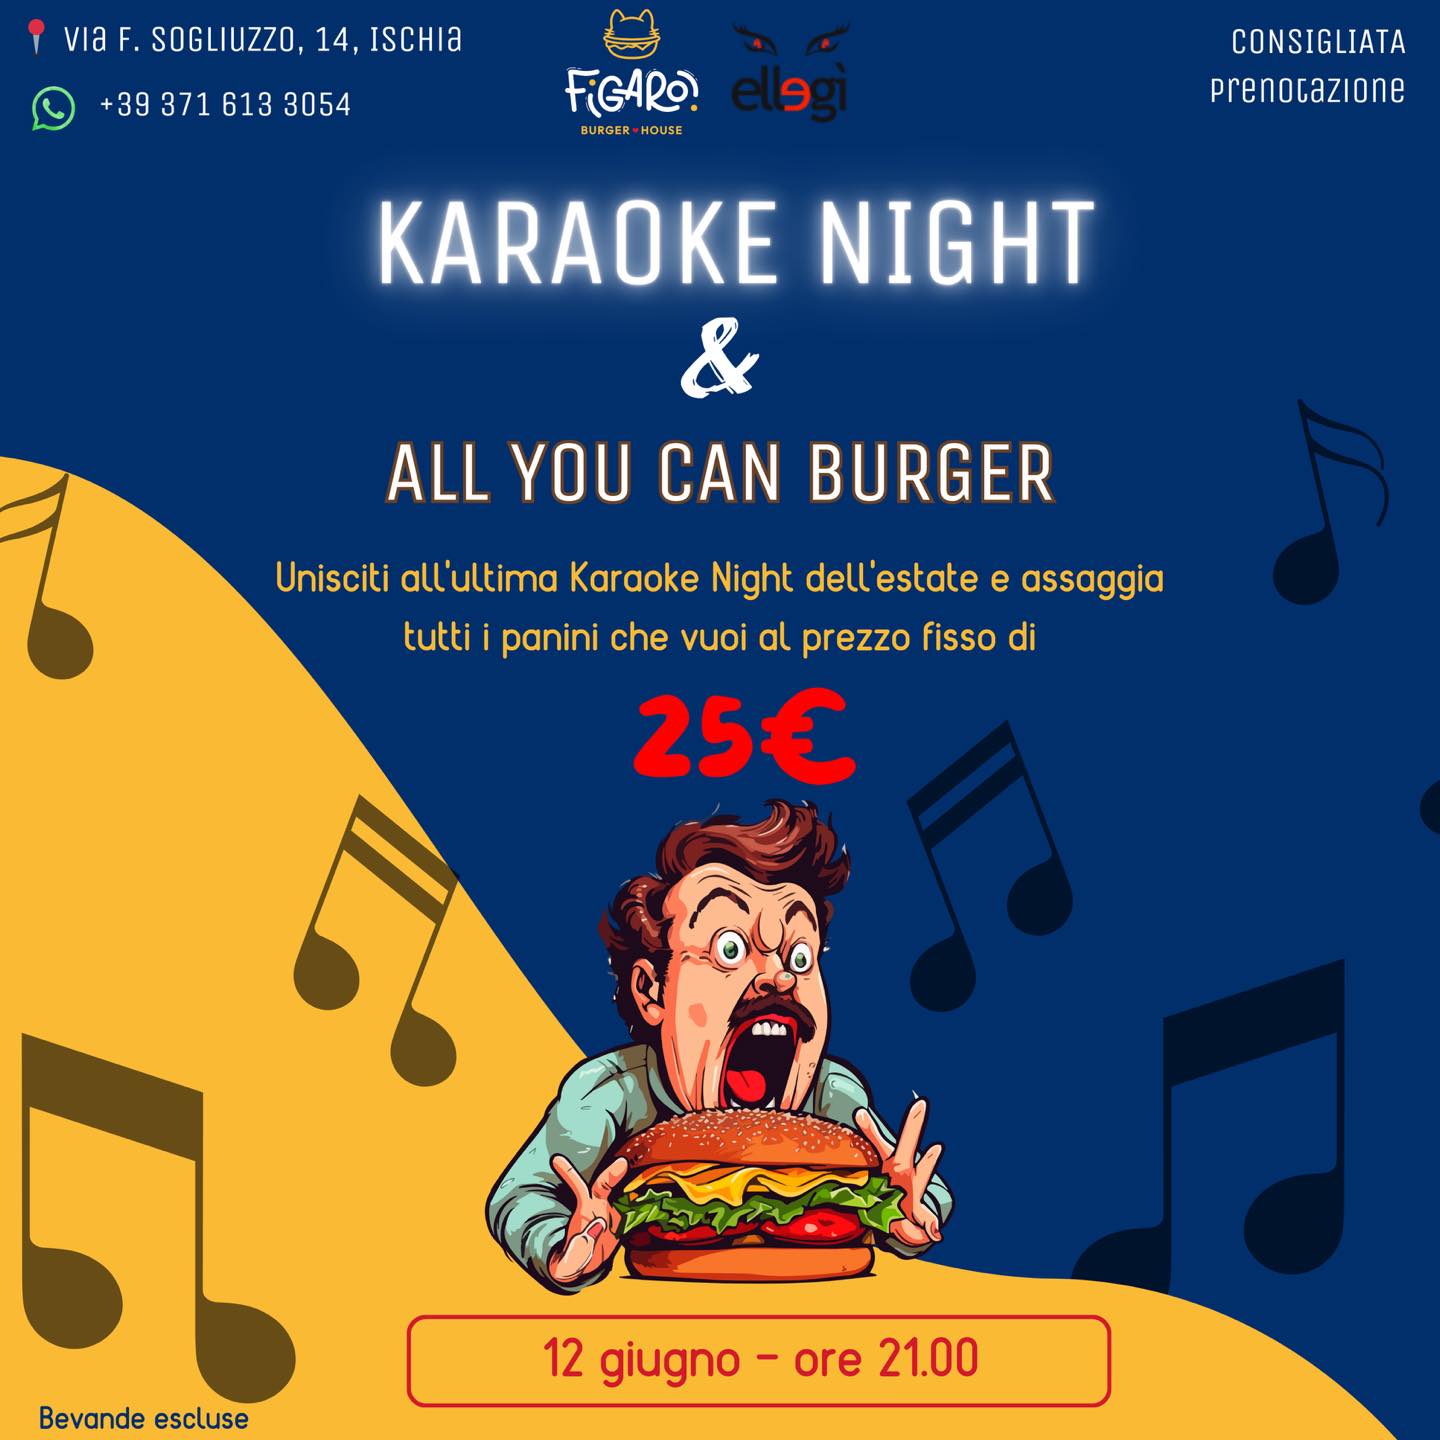 Karaoke night: all you can burger